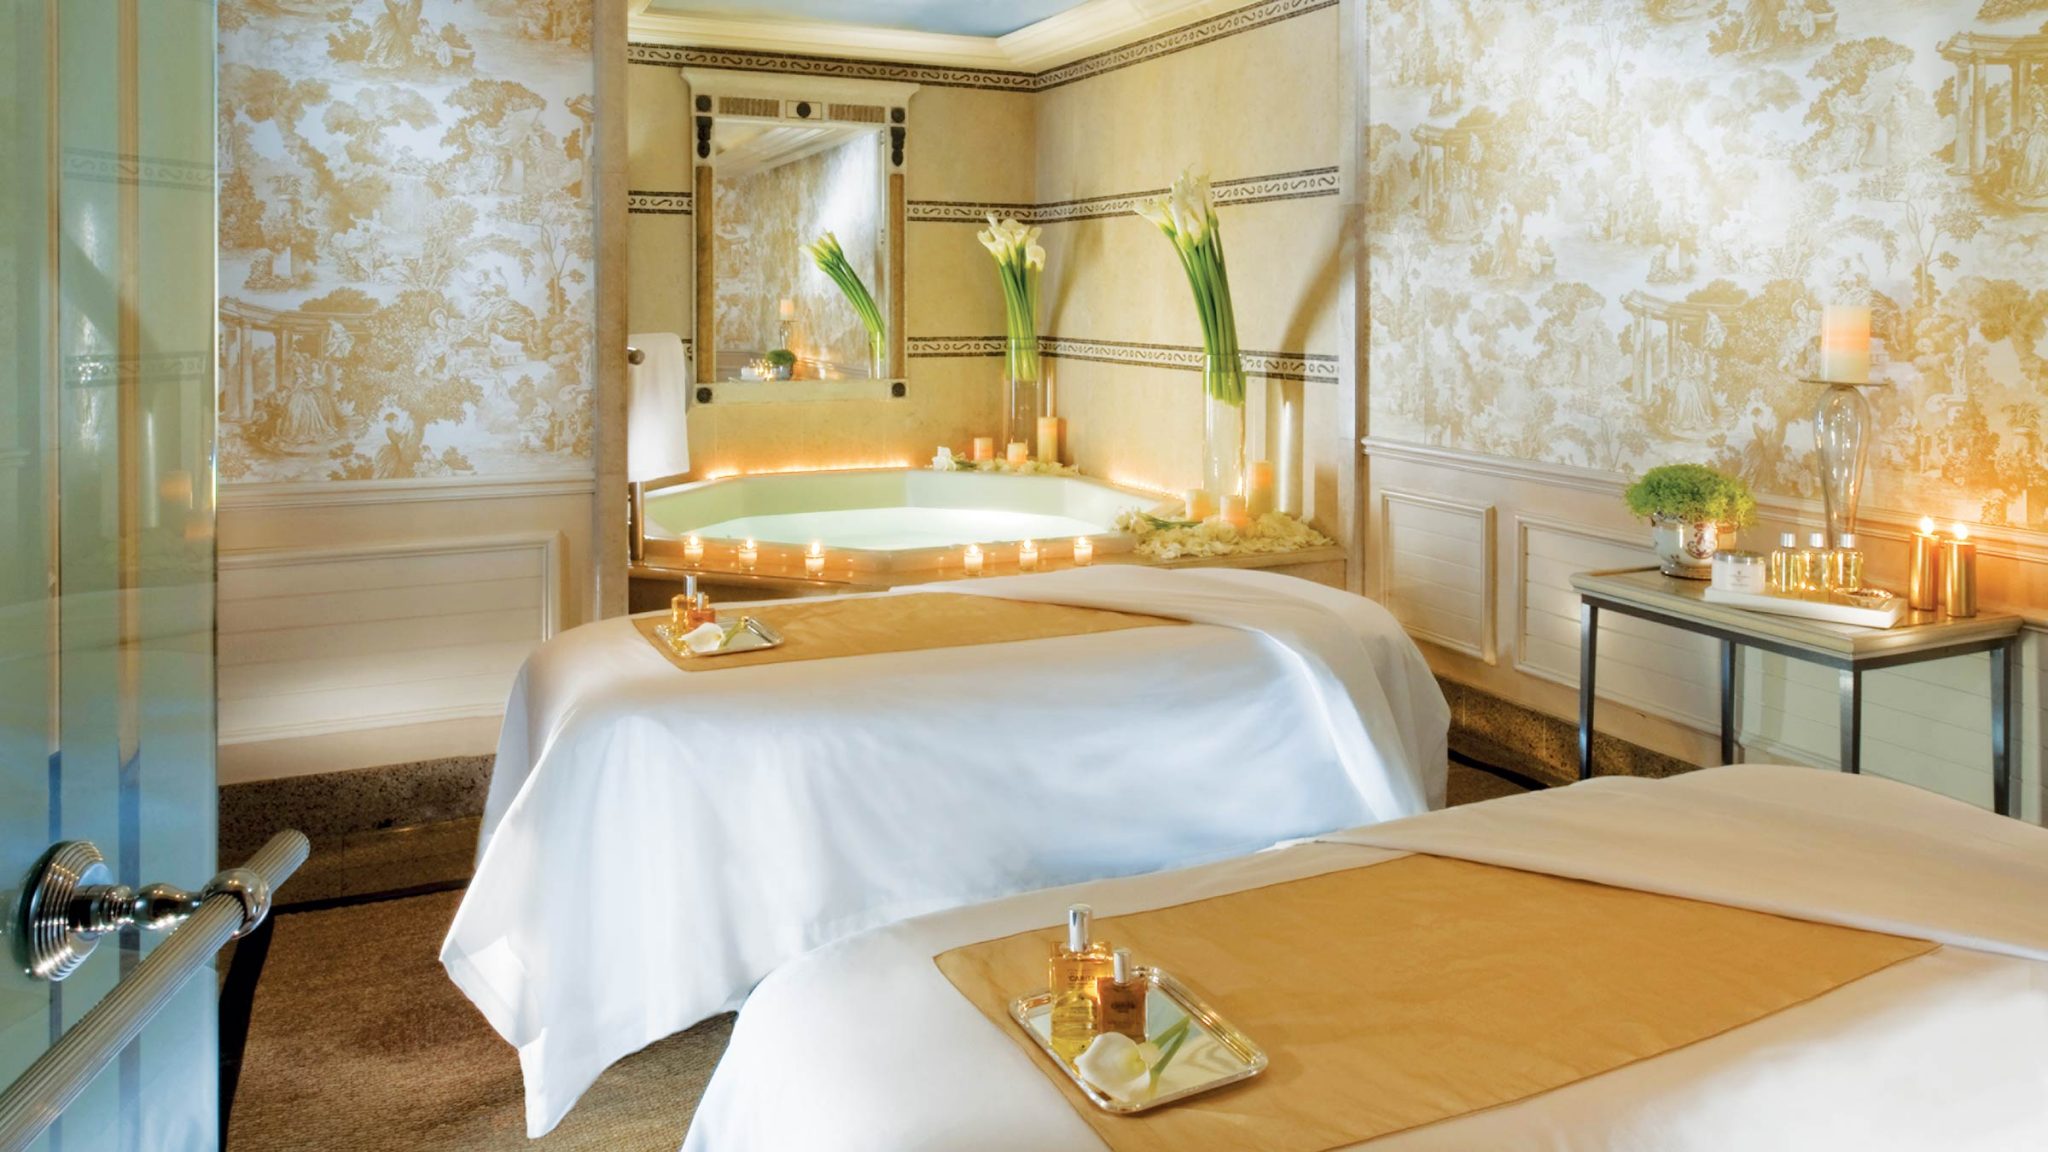 Spa treatment rooms at Four Seasons Hotel George V—Paris, France